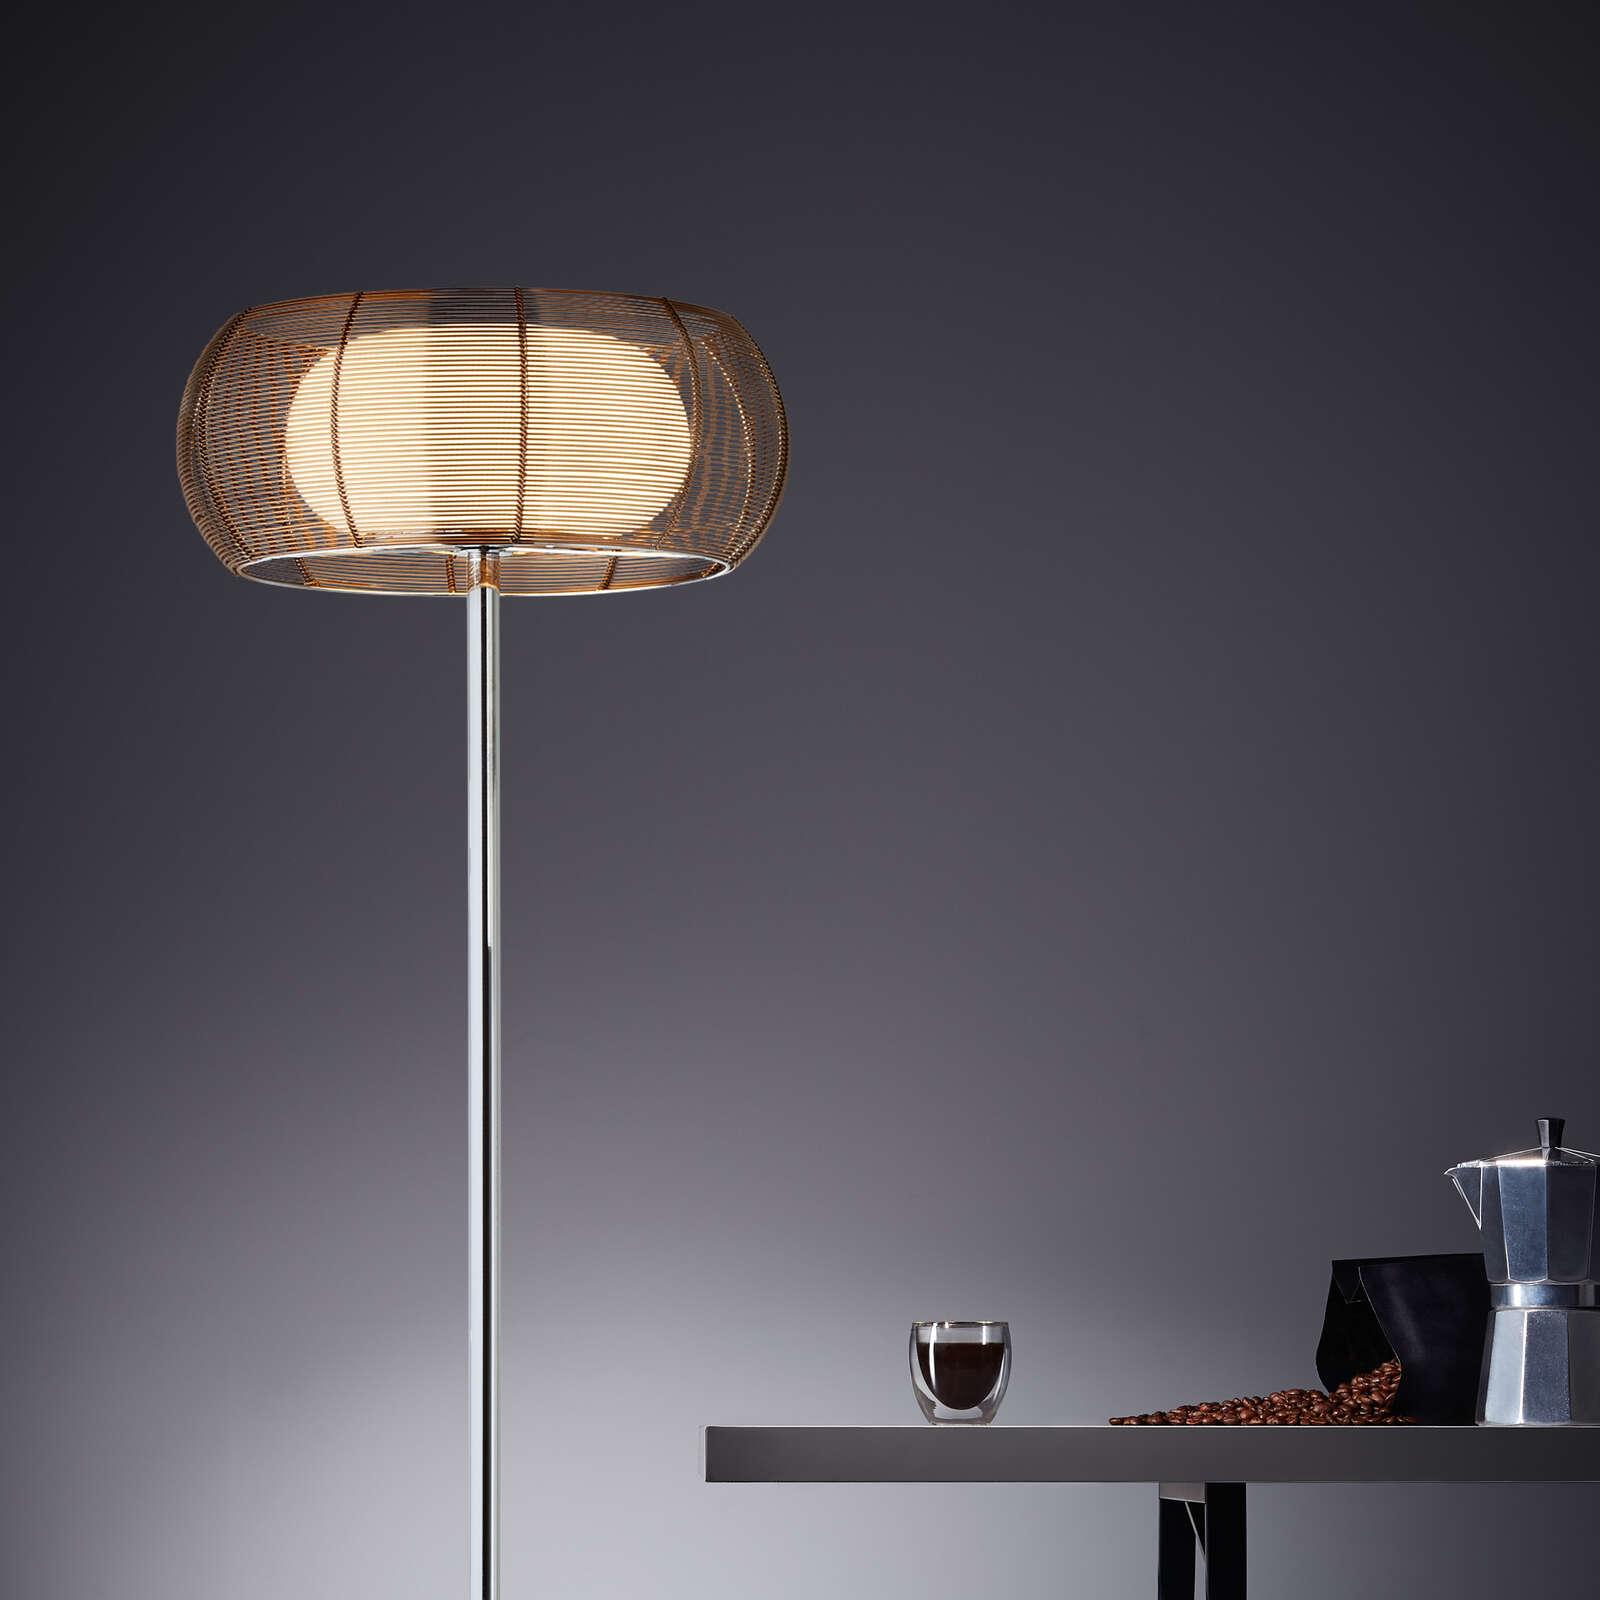             Glass floor lamp - Maxime 11 - Brown
        